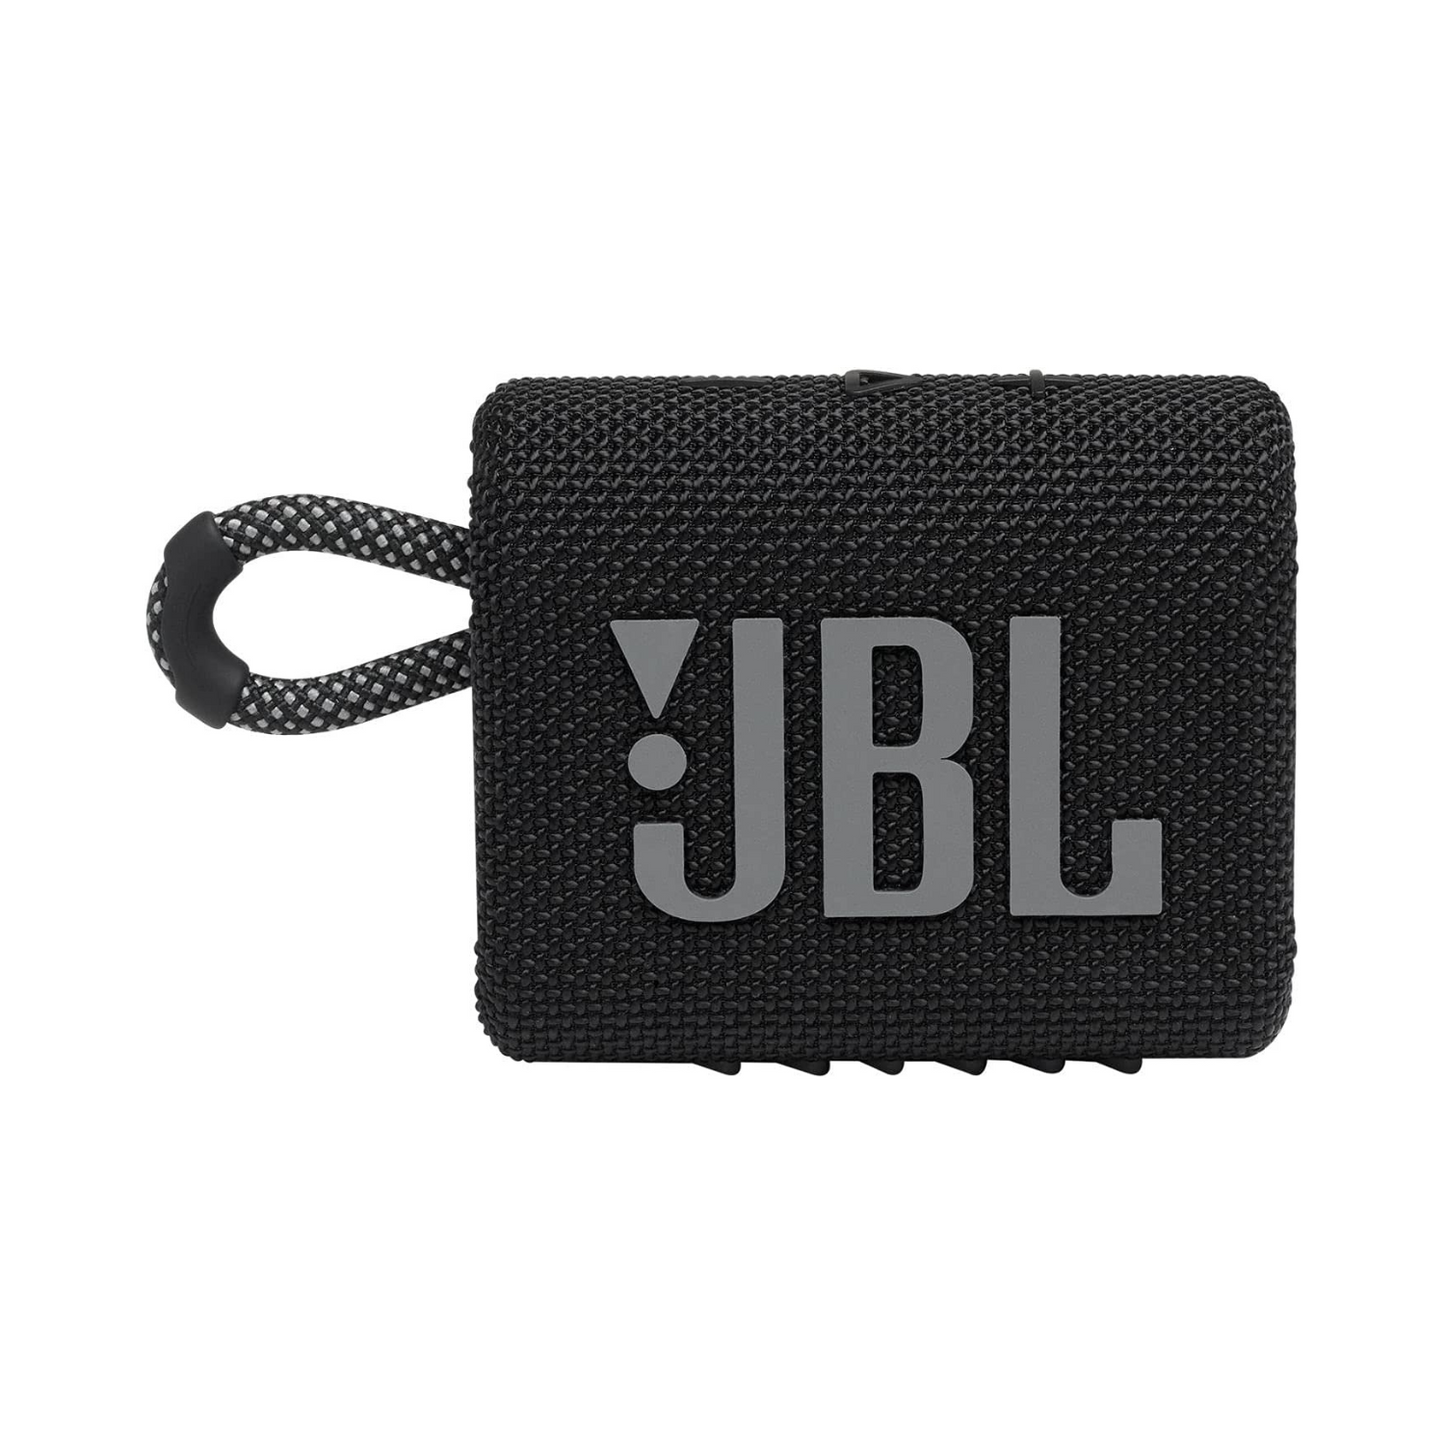 JBL Go 3 Portable Speaker with Bluetooth, Black